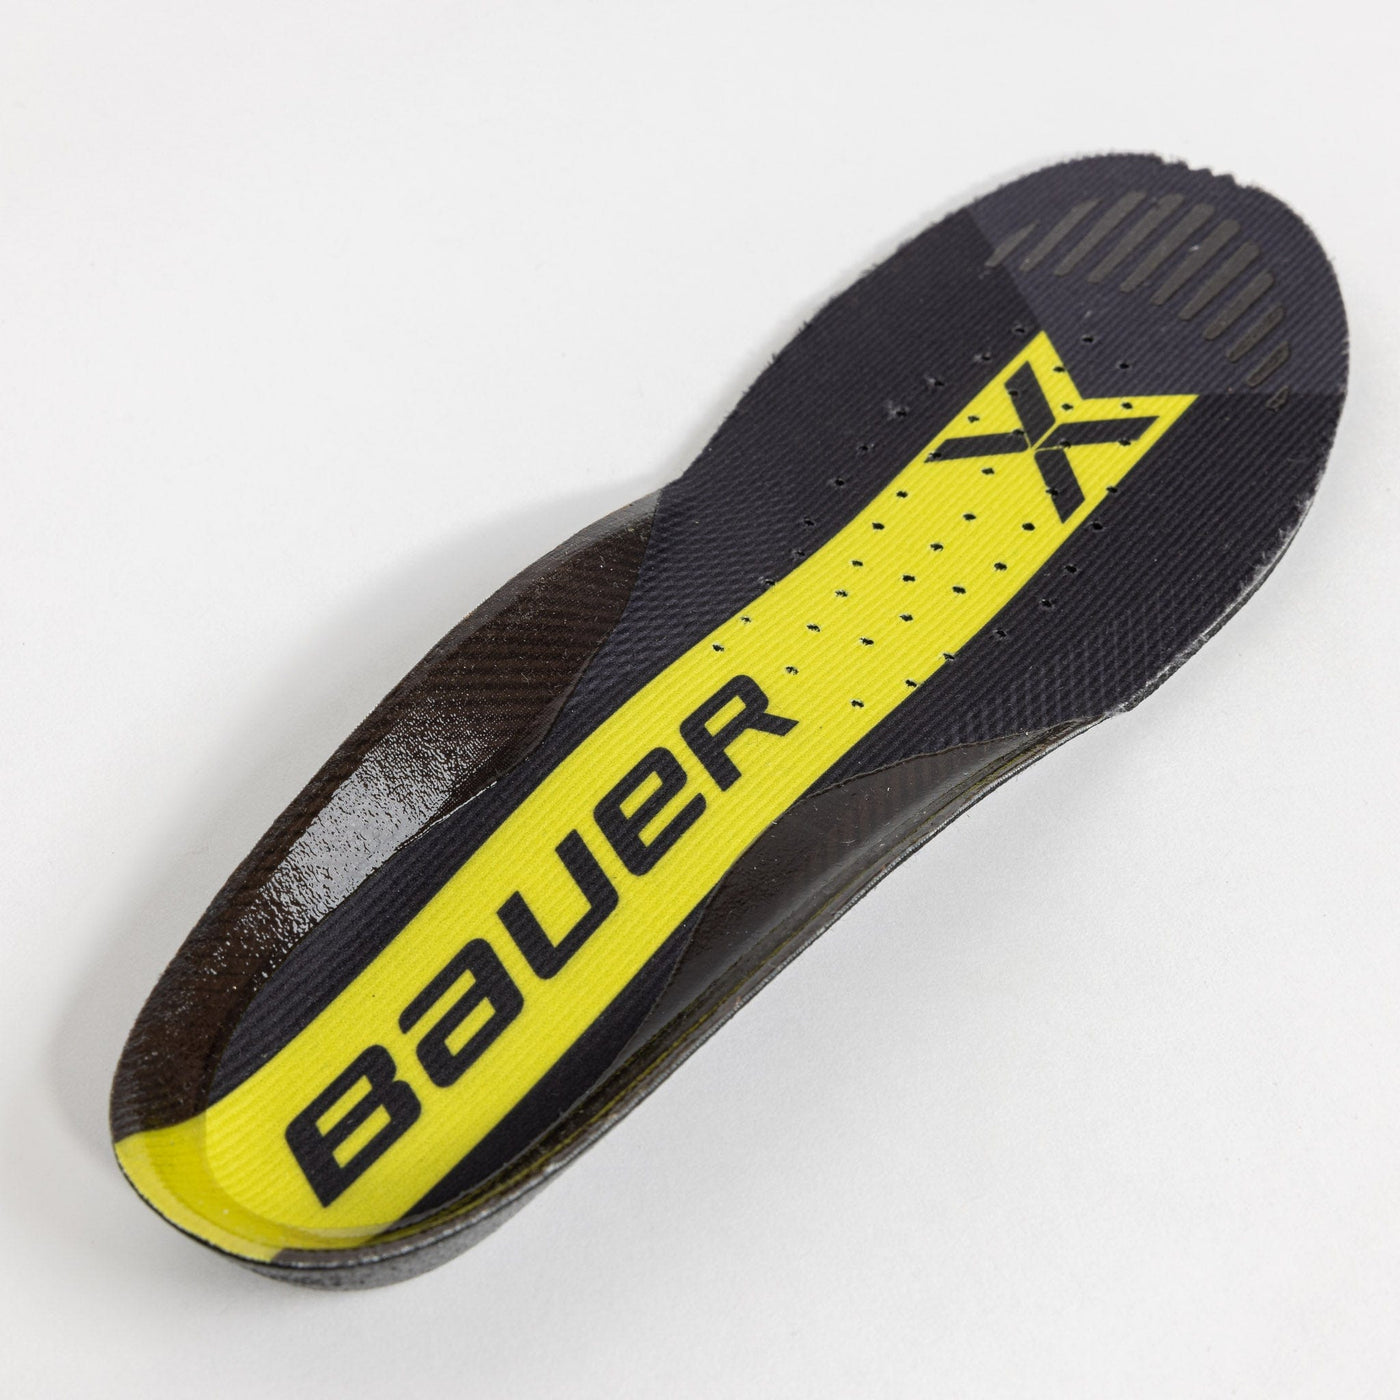 Bauer Vapor HyperLite2 Senior Hockey Skates - The Hockey Shop Source For Sports